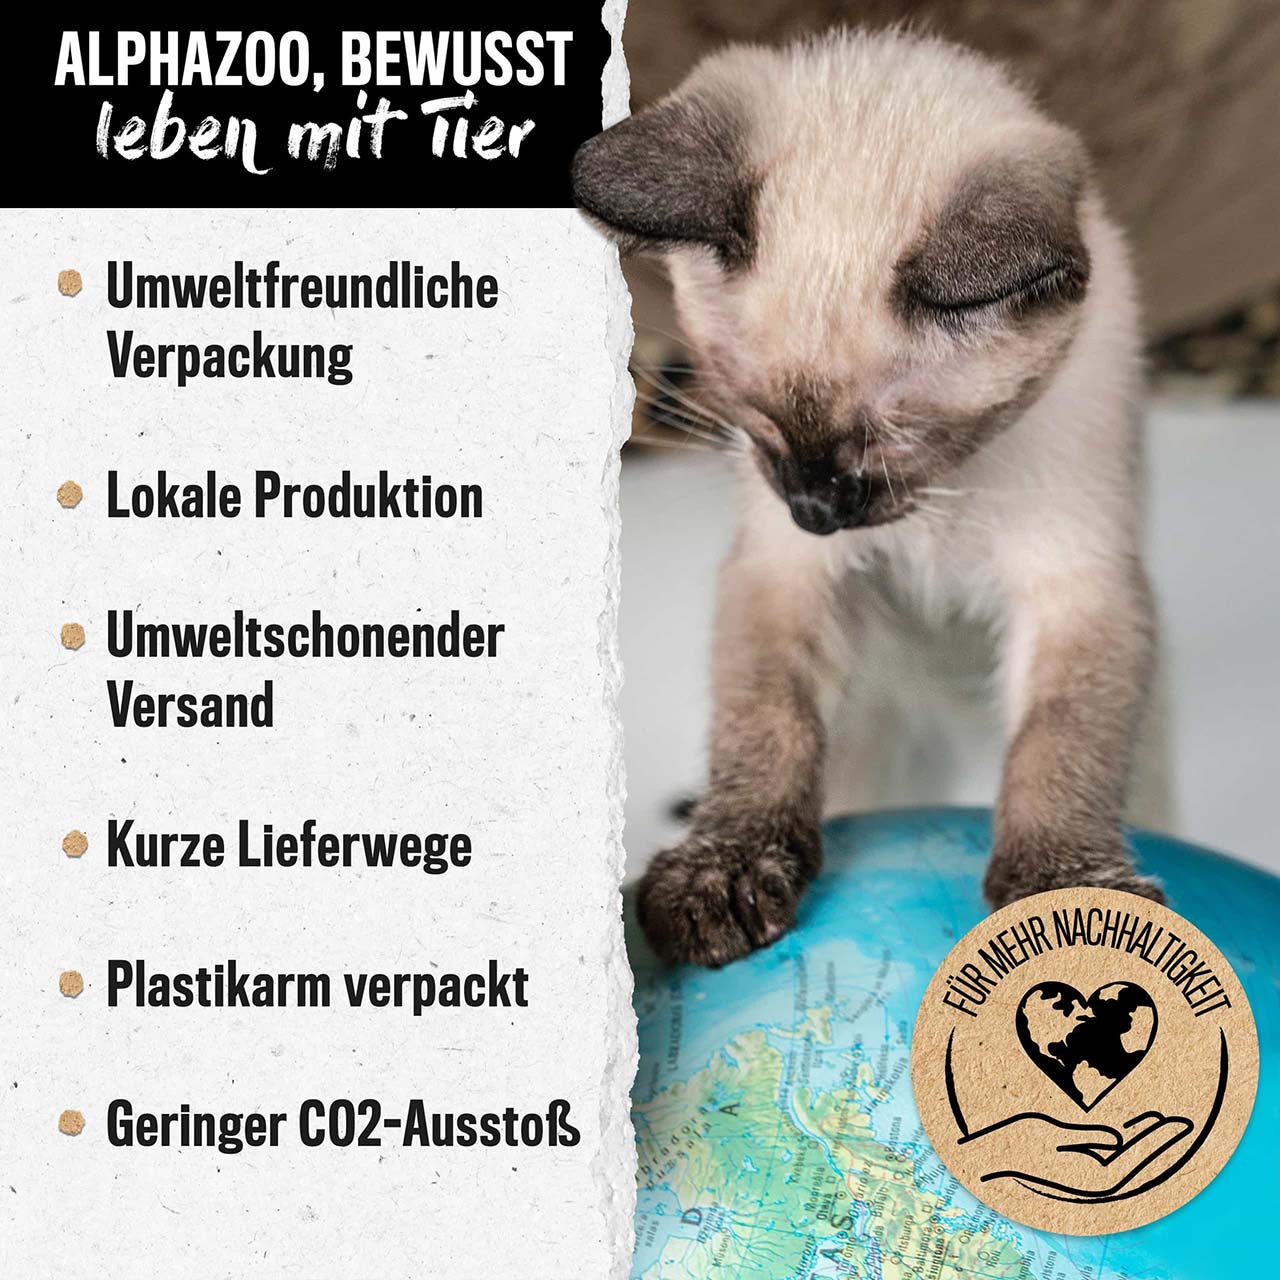 Fokus-Boost Bachblüten 15g für Hunde & Katzen I Konzentration Globuli